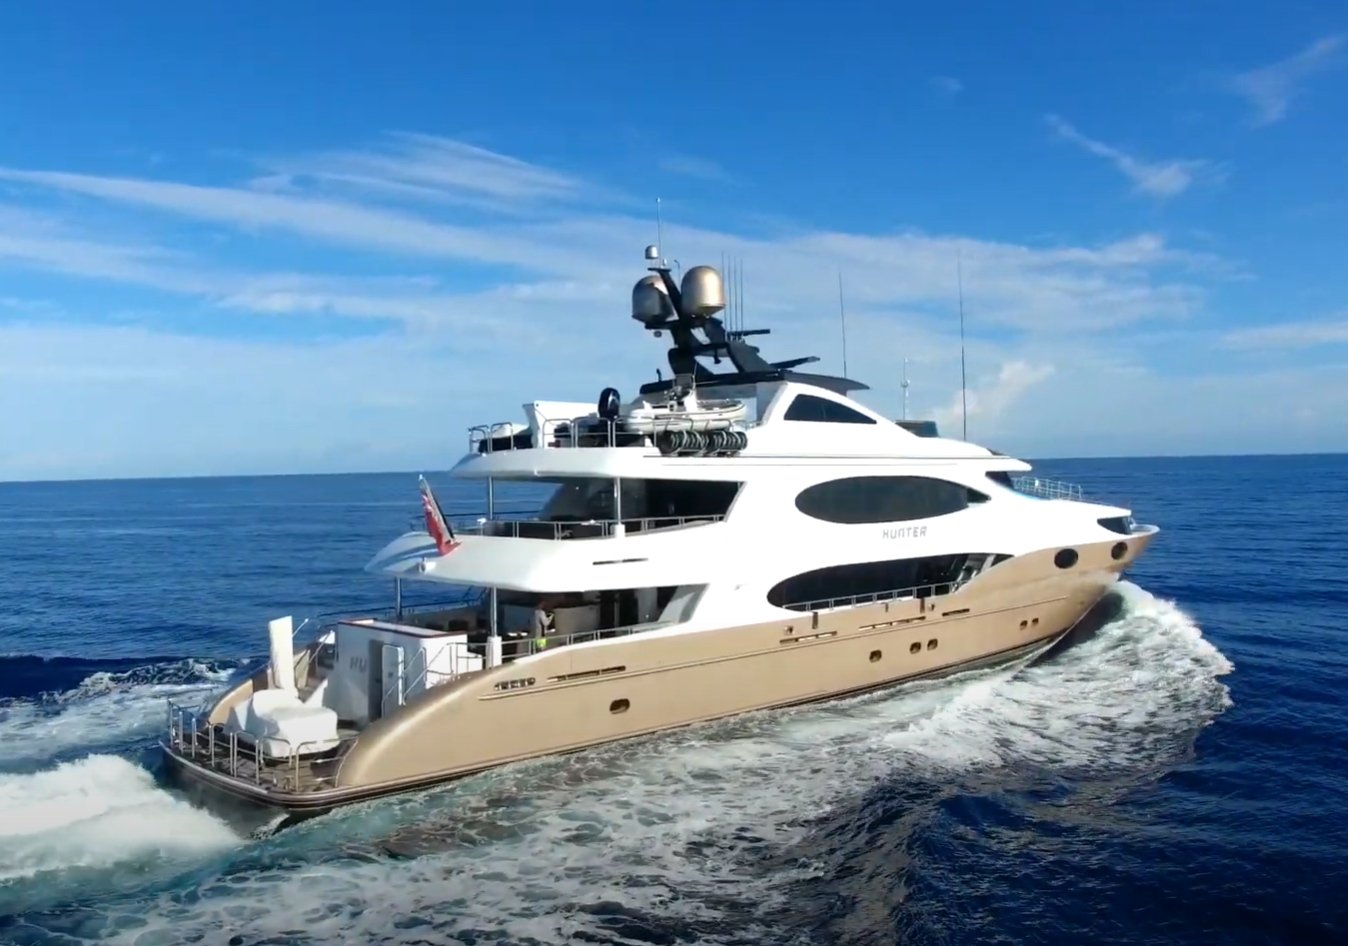 BAD ROMANCE Yacht • Trinity • 2008 • Owner US Millionaire